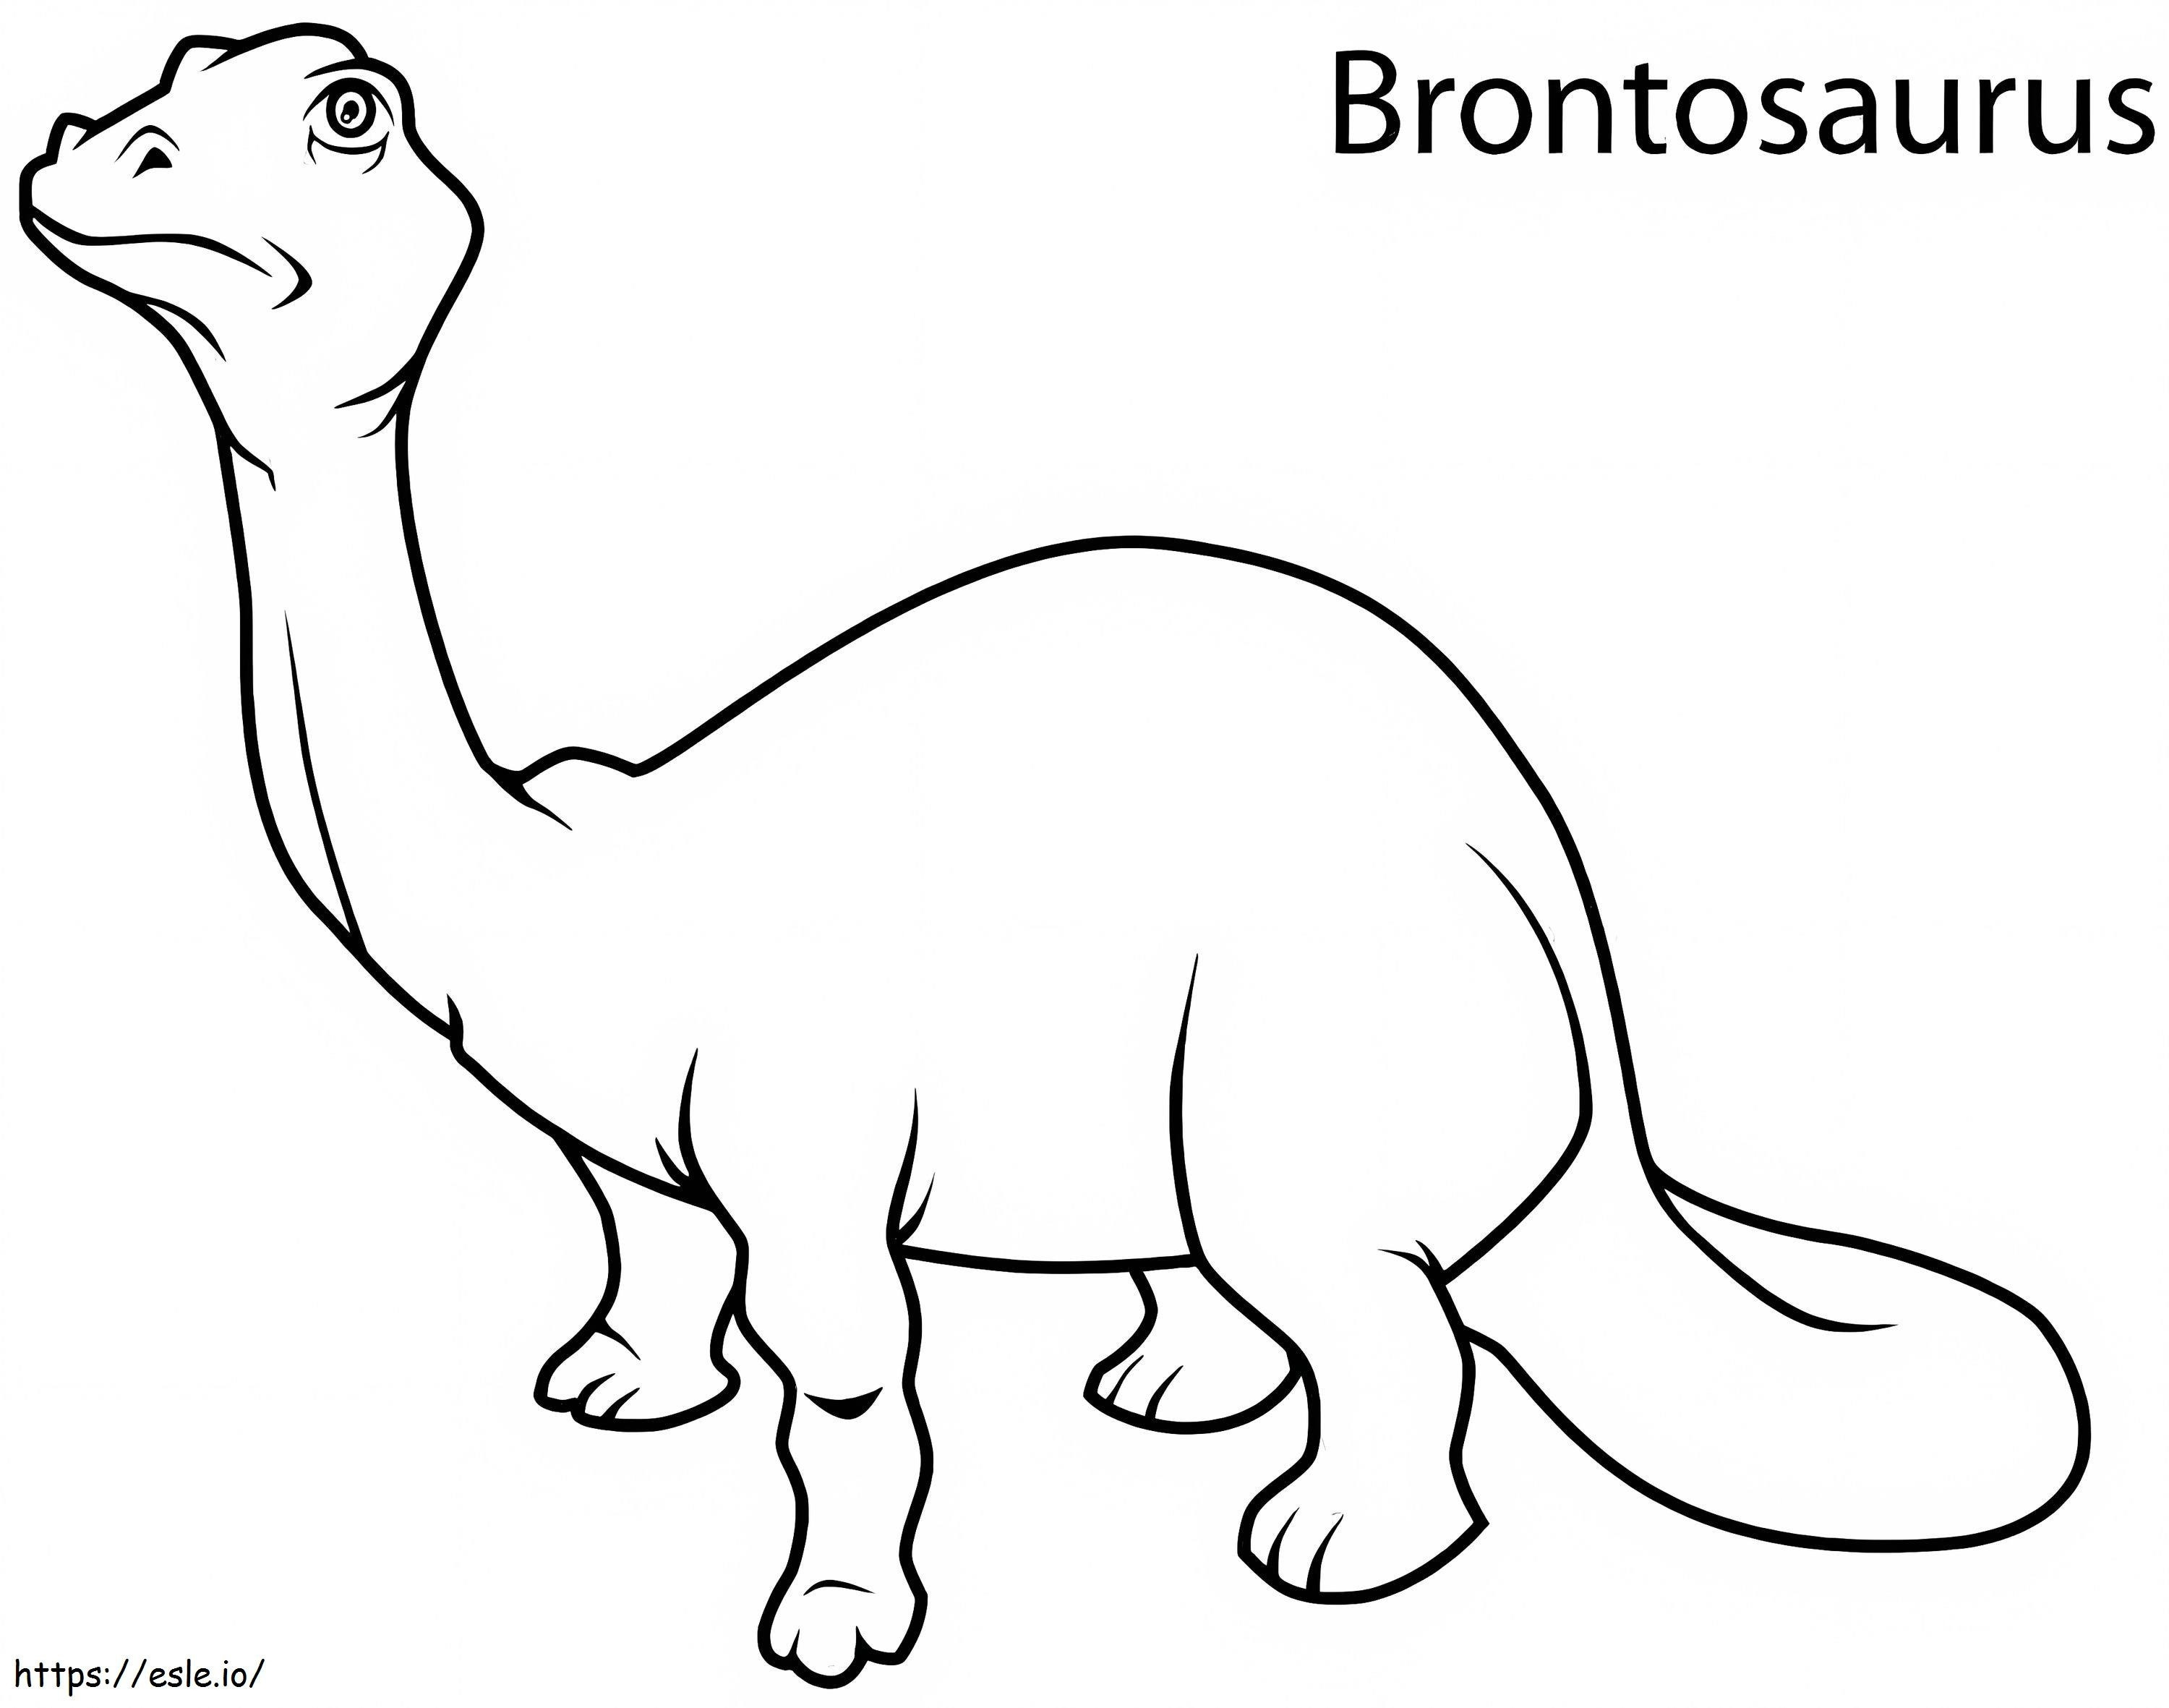 Brontosaurus 3 ausmalbilder